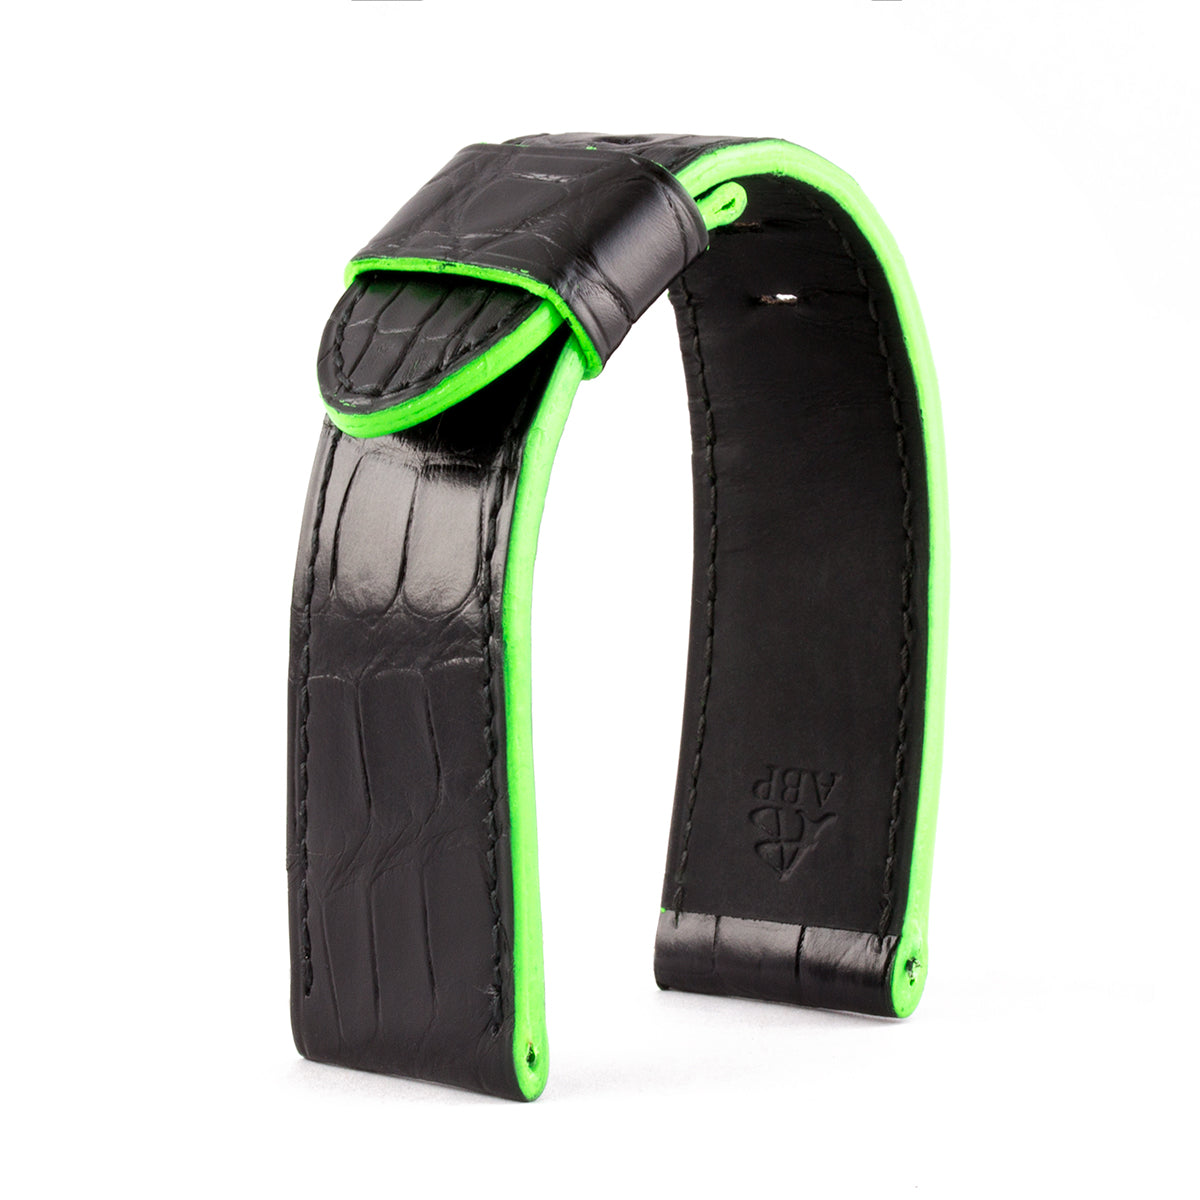 Panerai Radiomir & Luminor - Bracelet montre cuir fluorescent - Alligator noir / vert - watch band leather strap - ABP Concept -